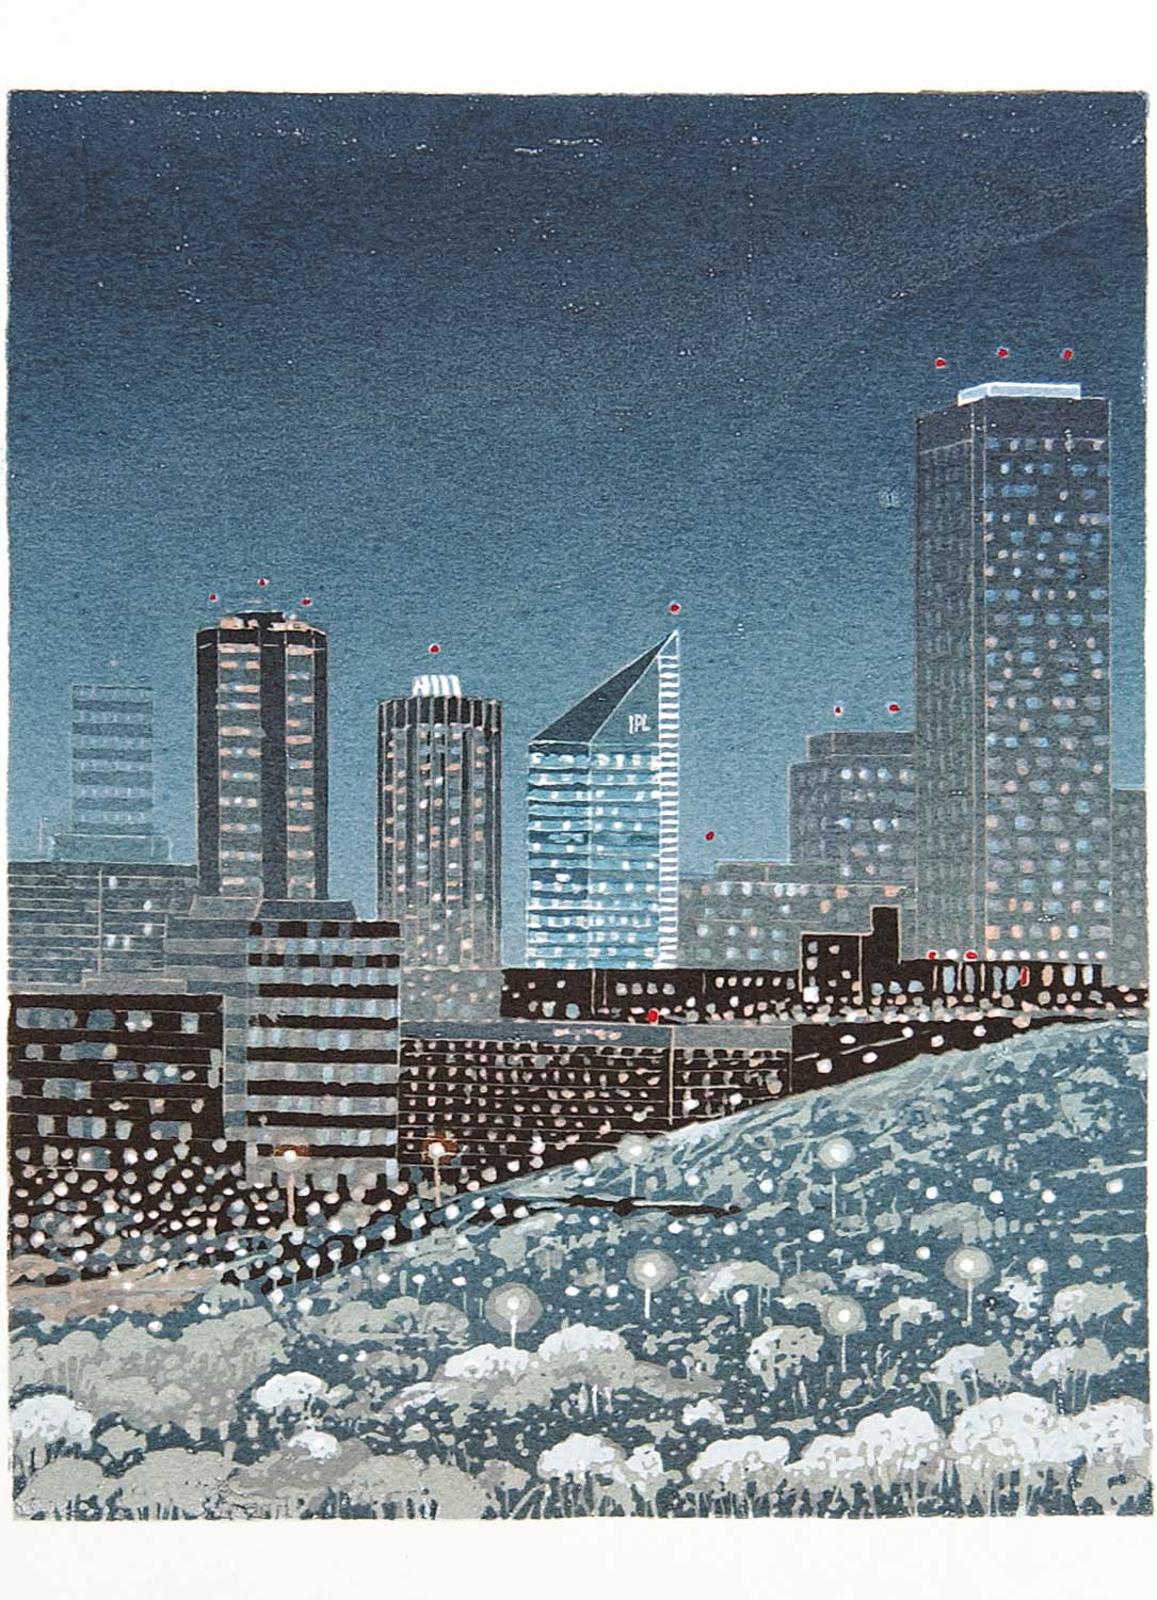 George Weber (1907-2002) - Untitled - Edmonton by Night